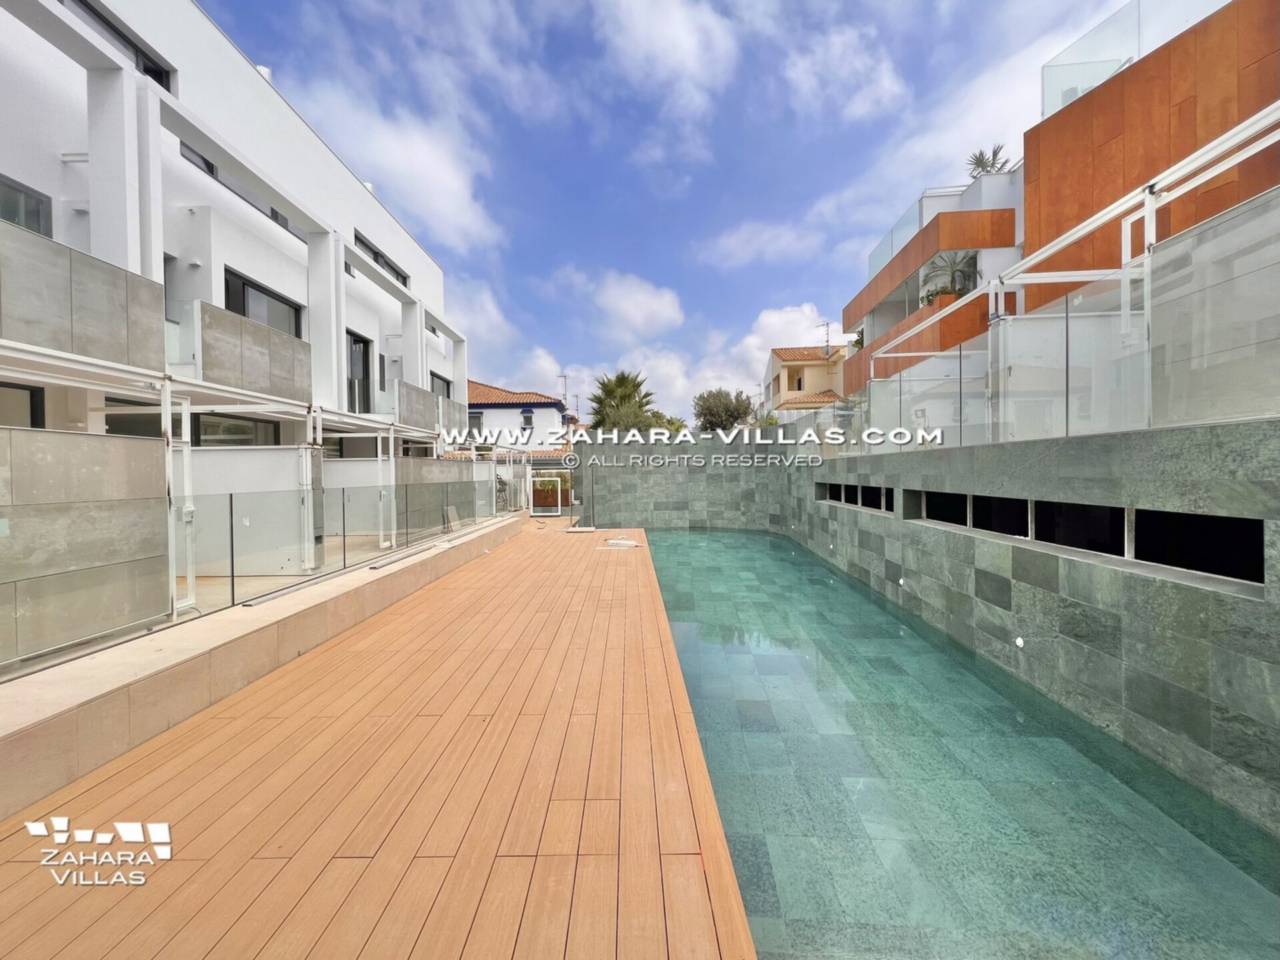 Imagen 3 de New development completed "EL OASIS DE ZAHARA" semi-detached houses by the sea